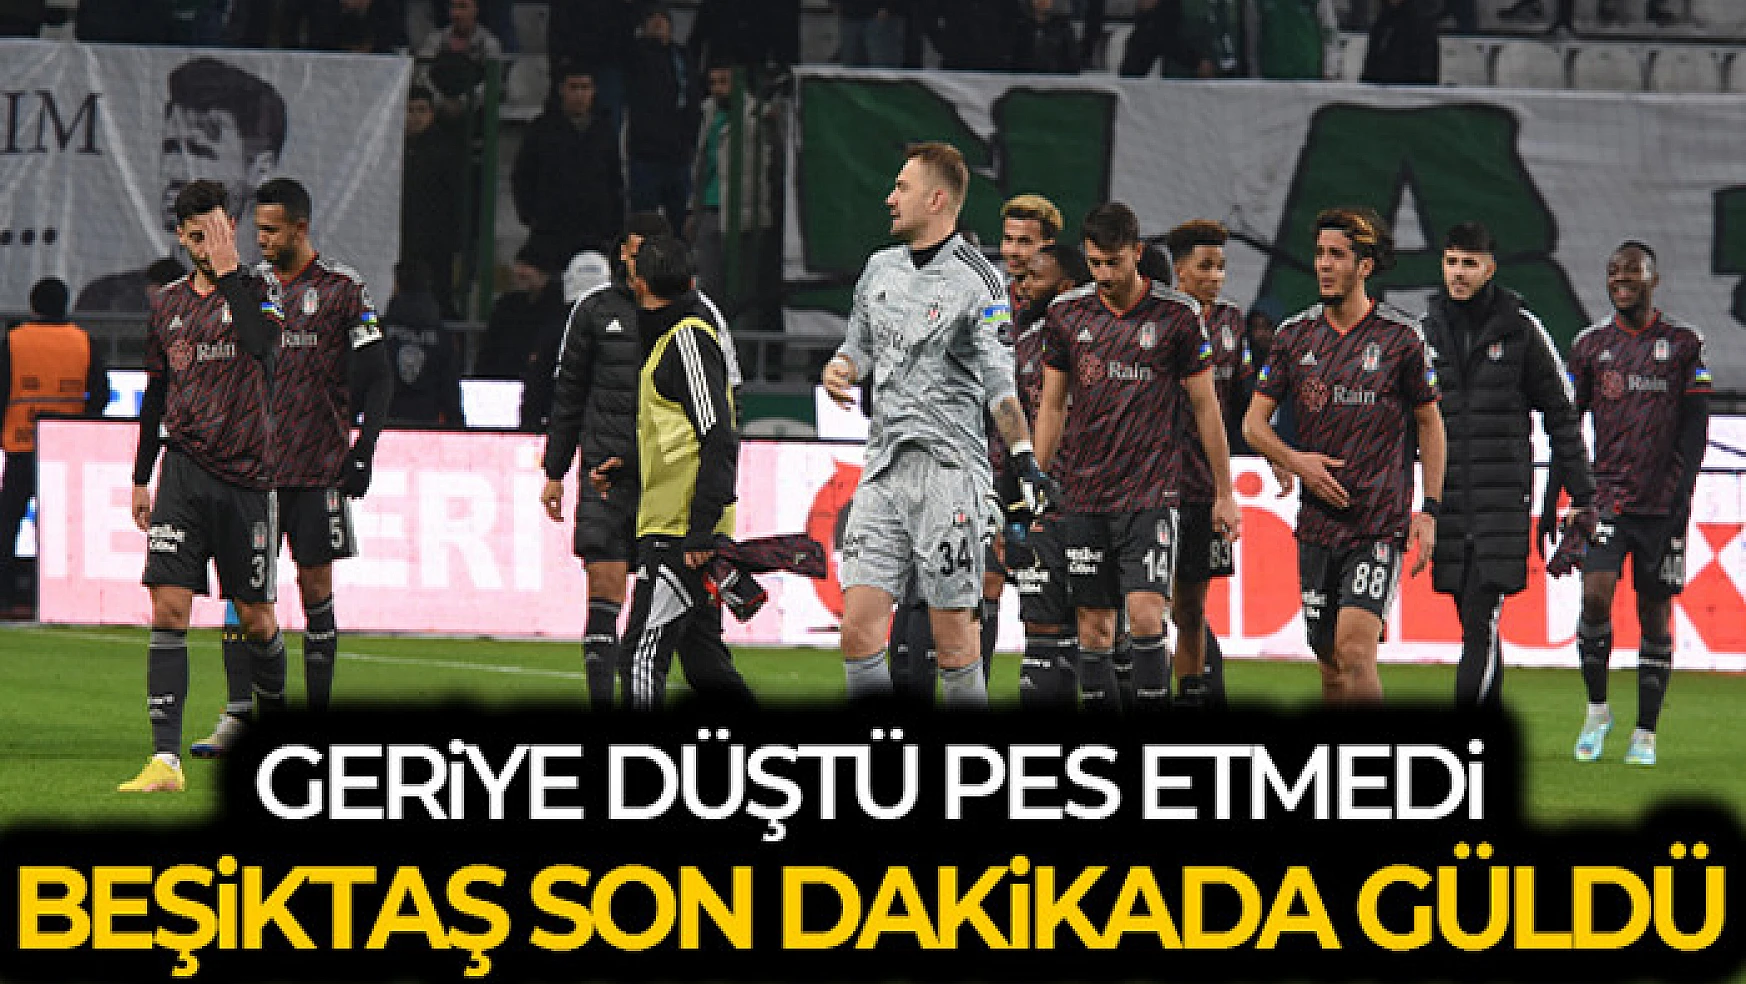 Beşiktaş son dakikada güldü